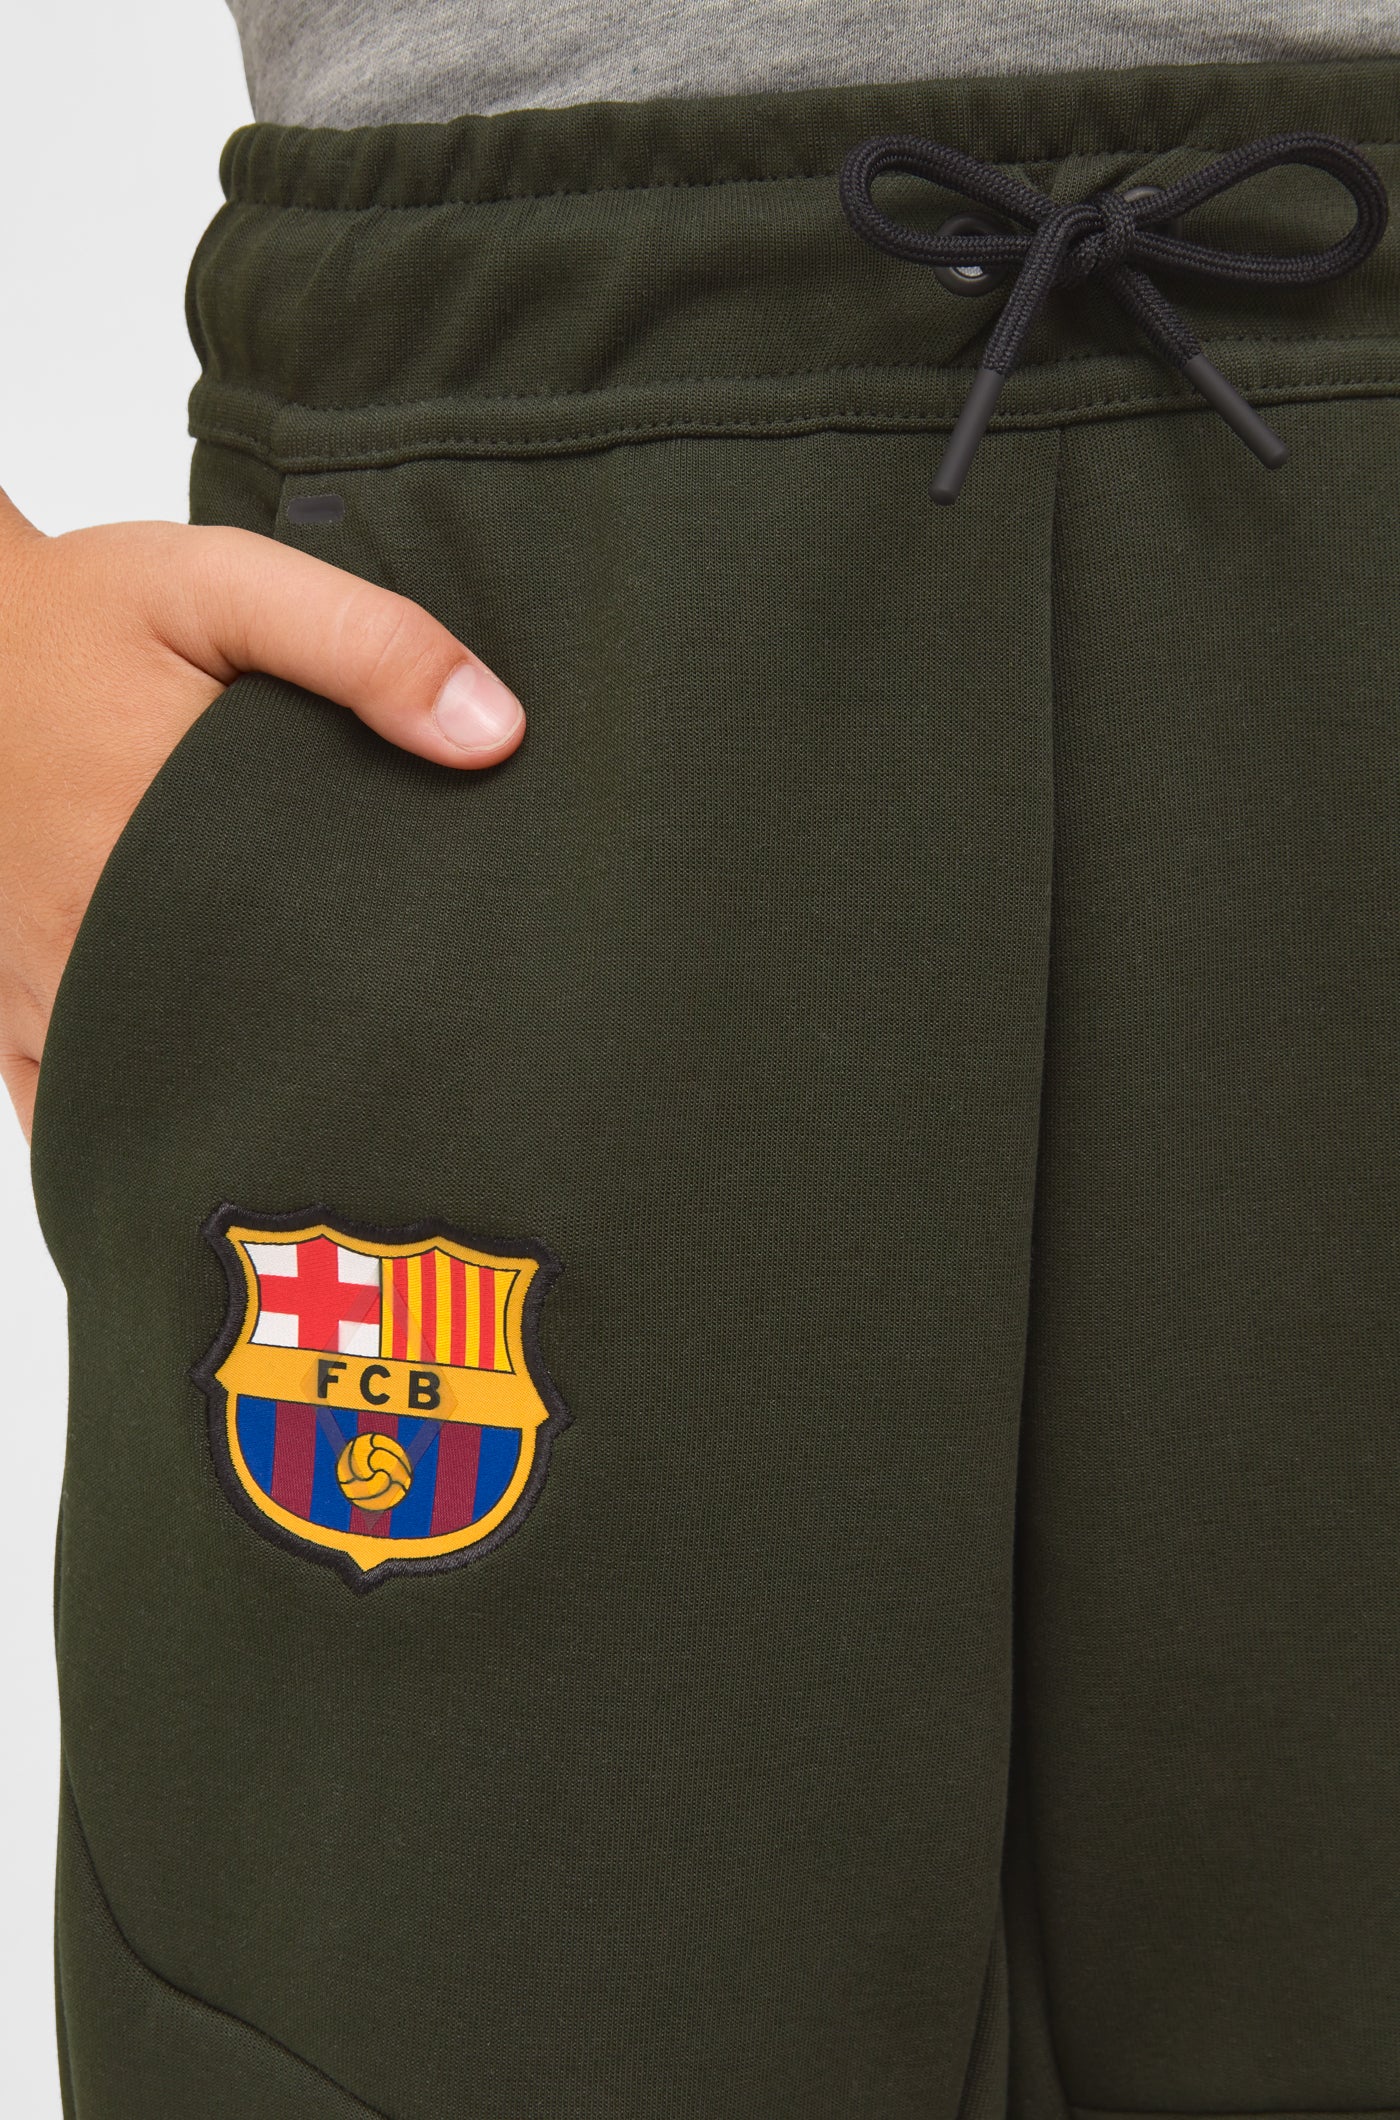 Tech Barça Nike Pants - Junior